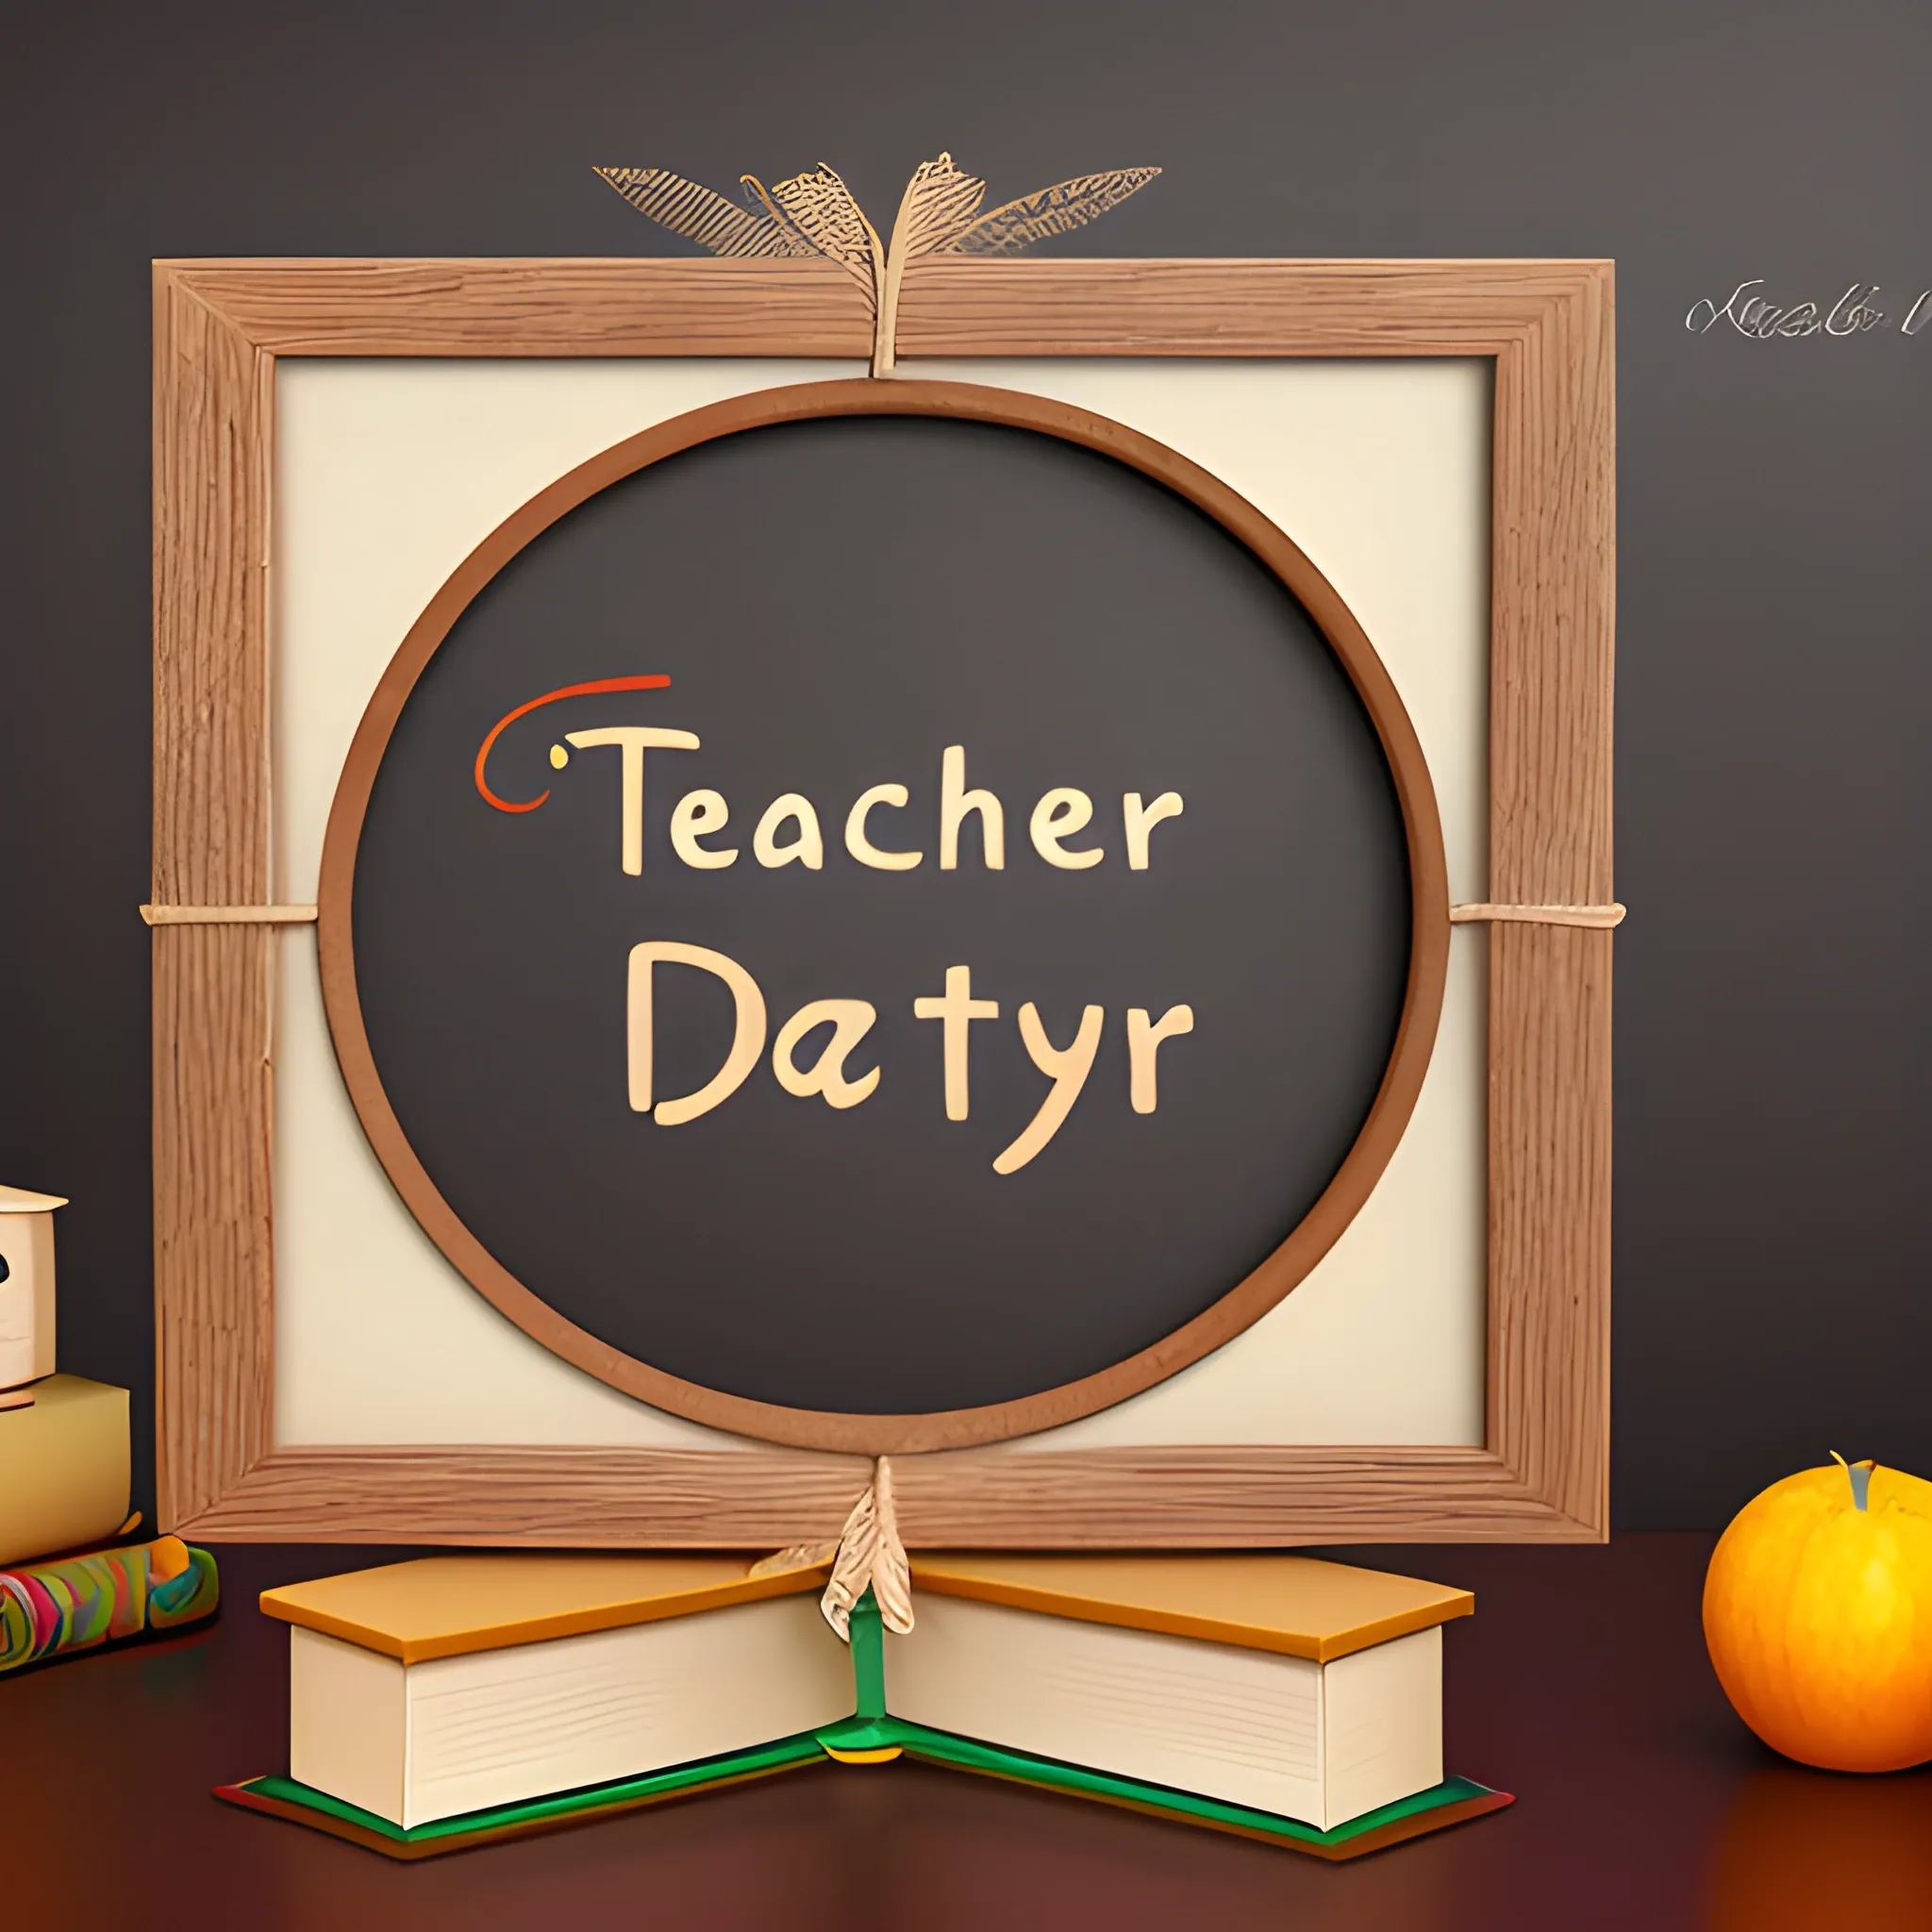 Teacher's Day 3d animated image, natural, stunning 
Write  "Ariful" work using watermark below